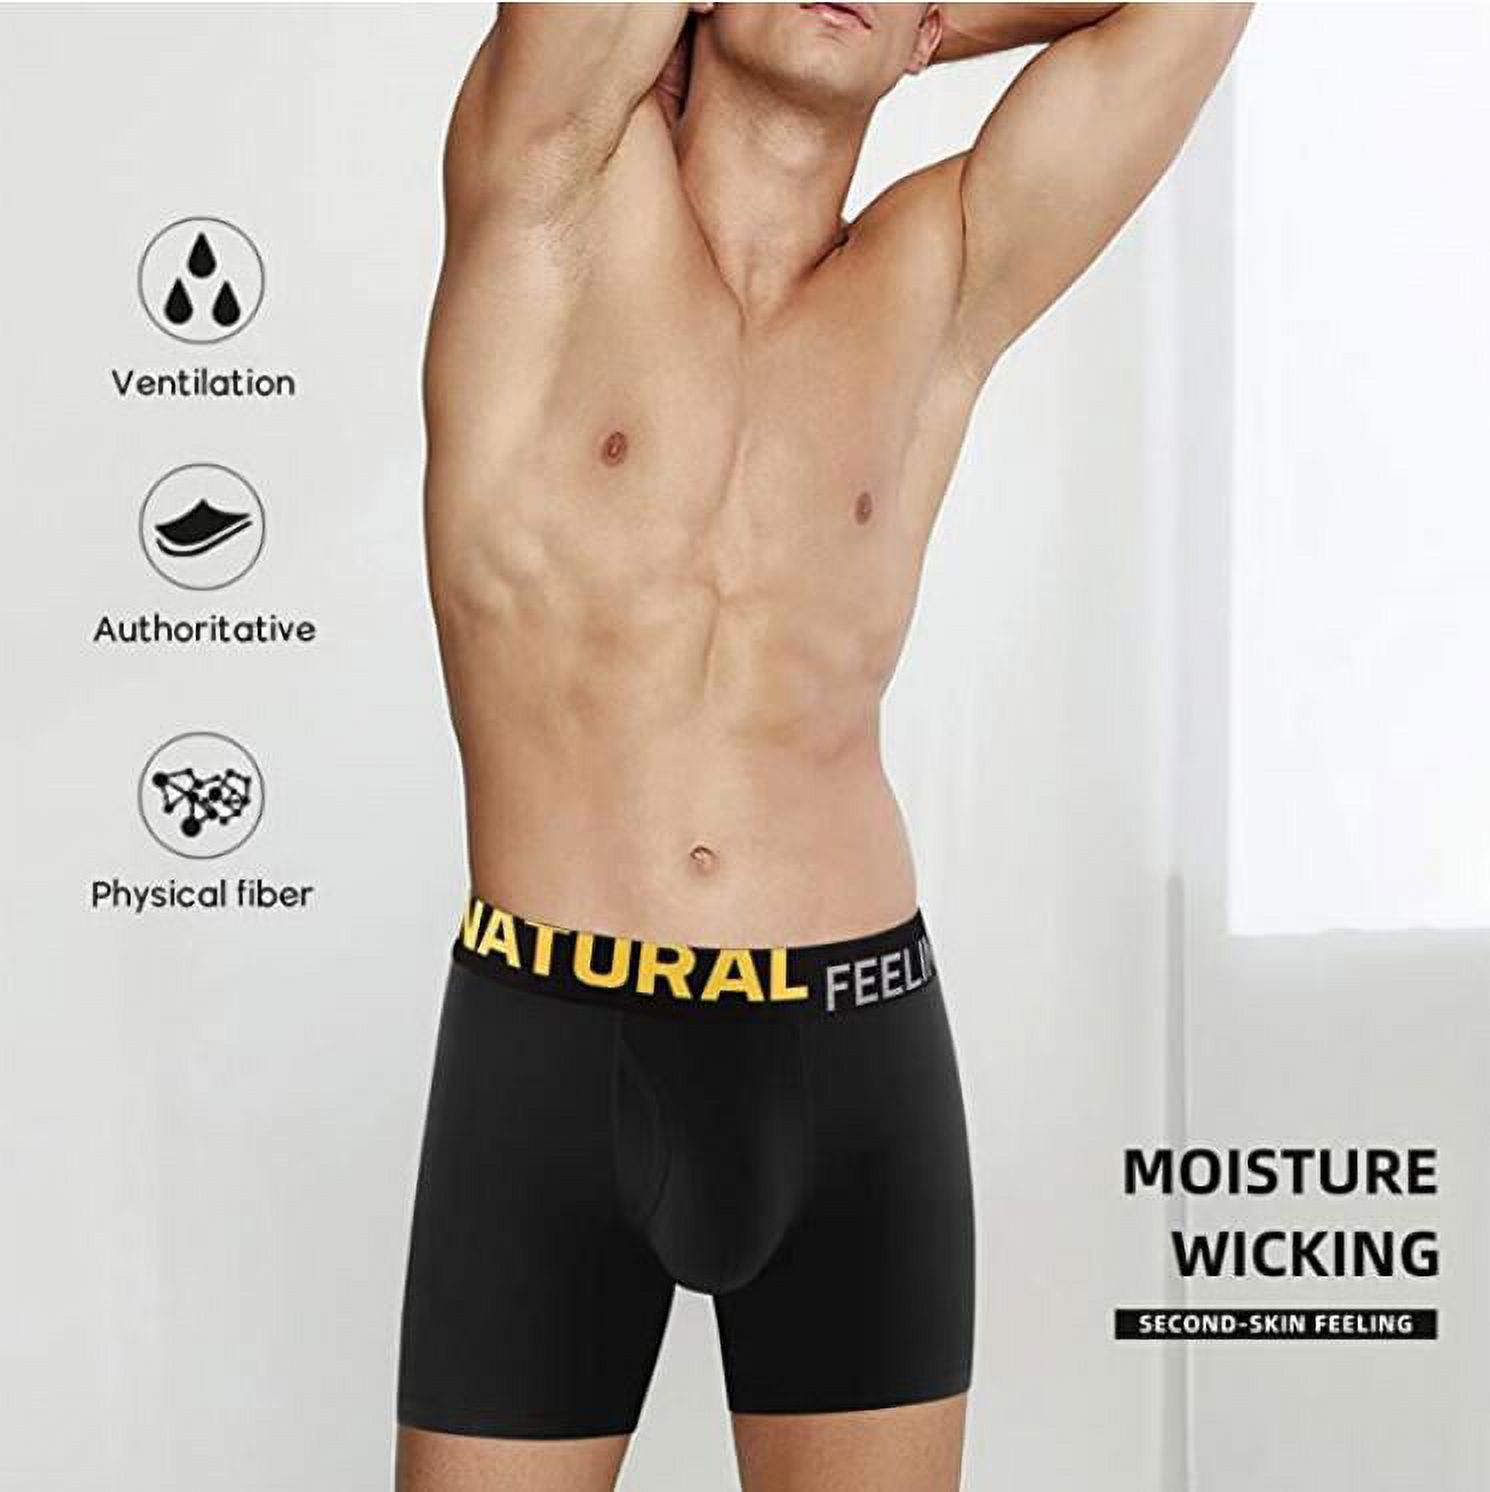 Natural Feelings Boxer Briefs Mens Underwear Men Pack Soft Cotton Open Fly Underwear - image 3 of 3